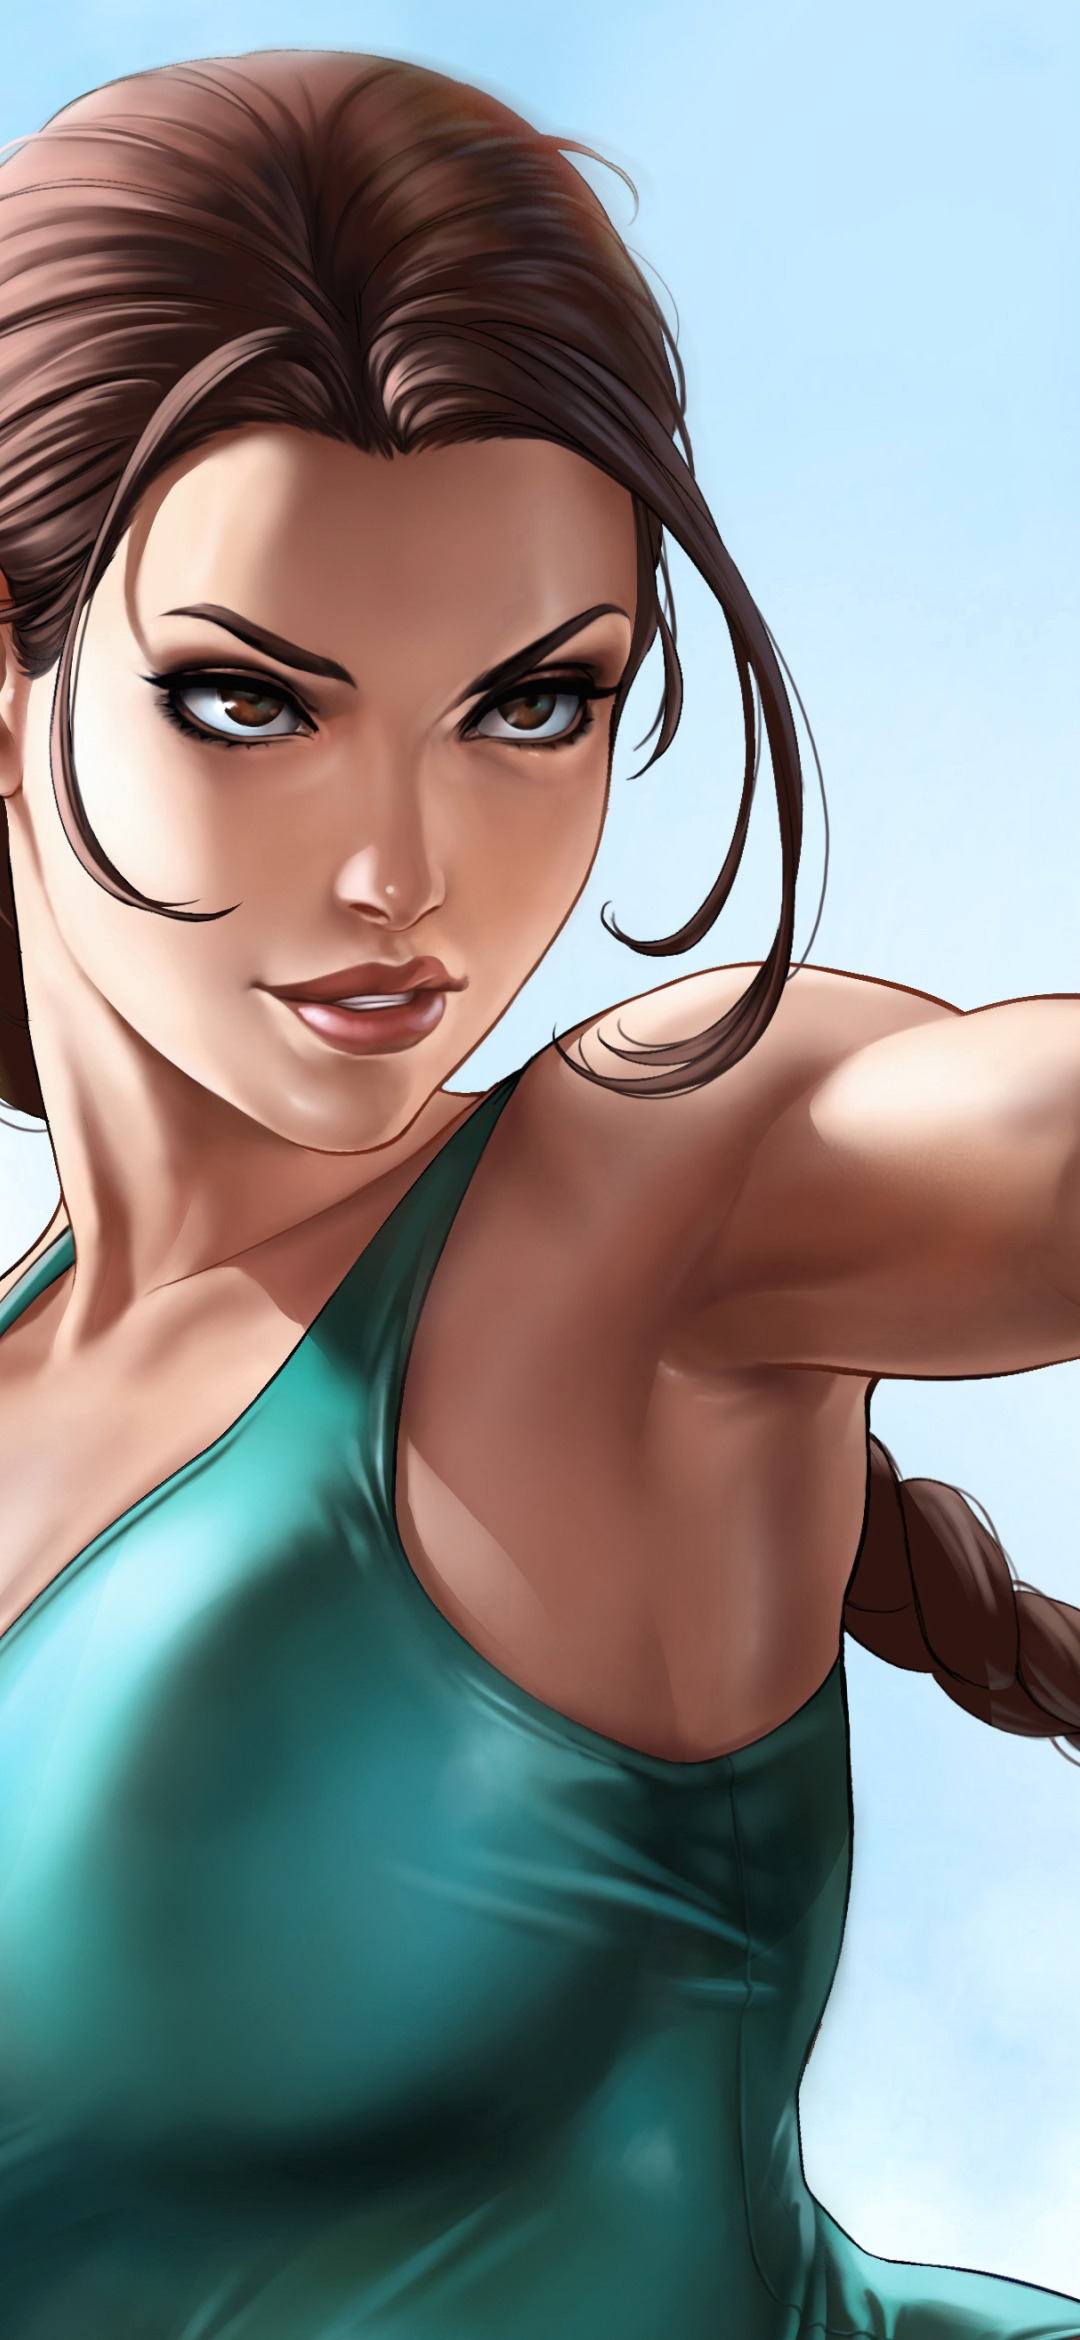 Download Wallpaper Girl Tomb Raider Girl Art Lara Croft By Dandonfuga Section Games In